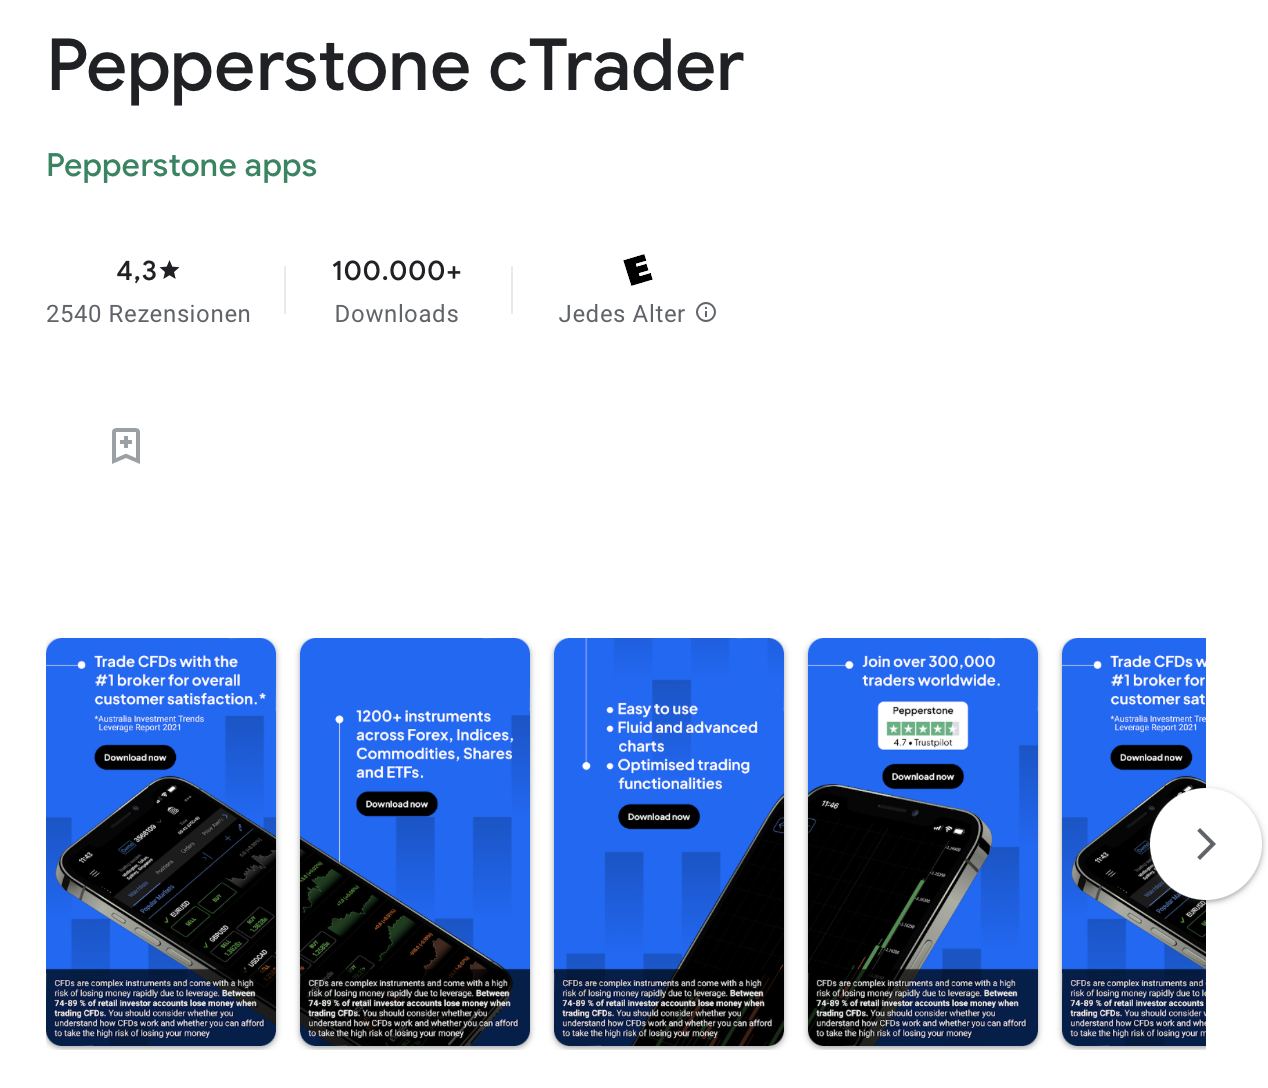 Muat turun cTrader Pepperstone di Gedung Google Play